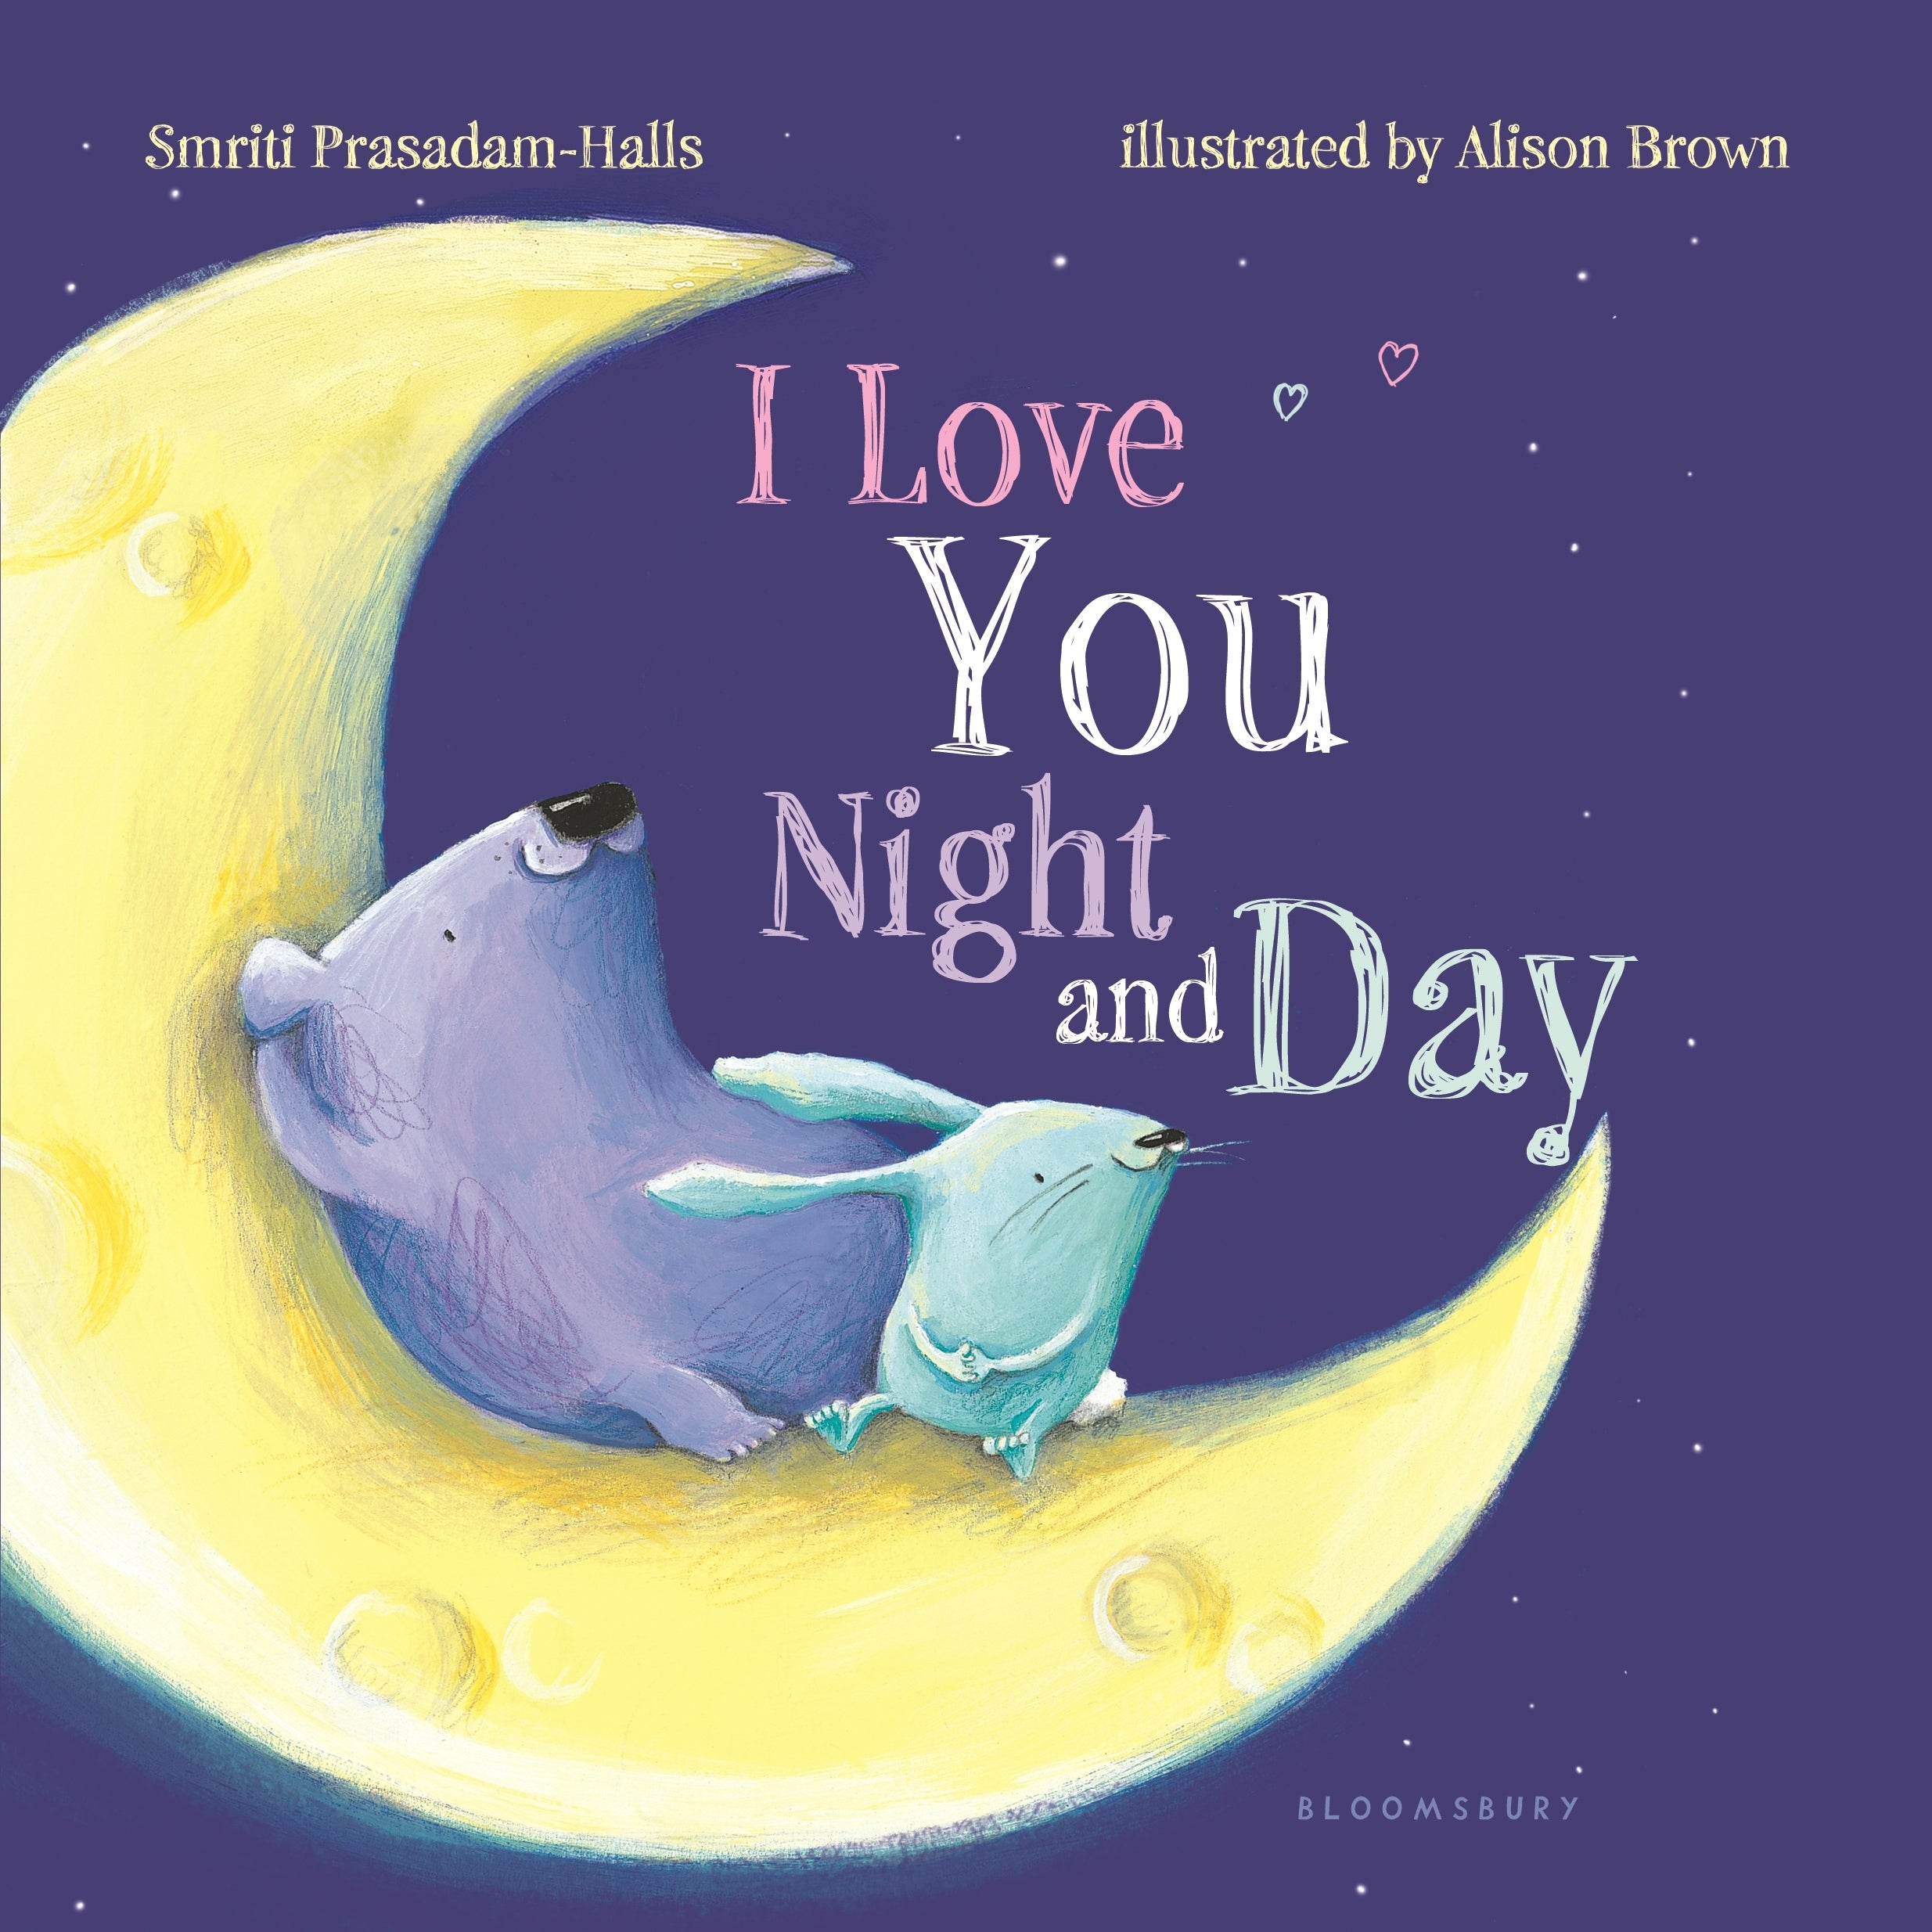 I Love you Night and Day by Smriti Prasadam-Halls